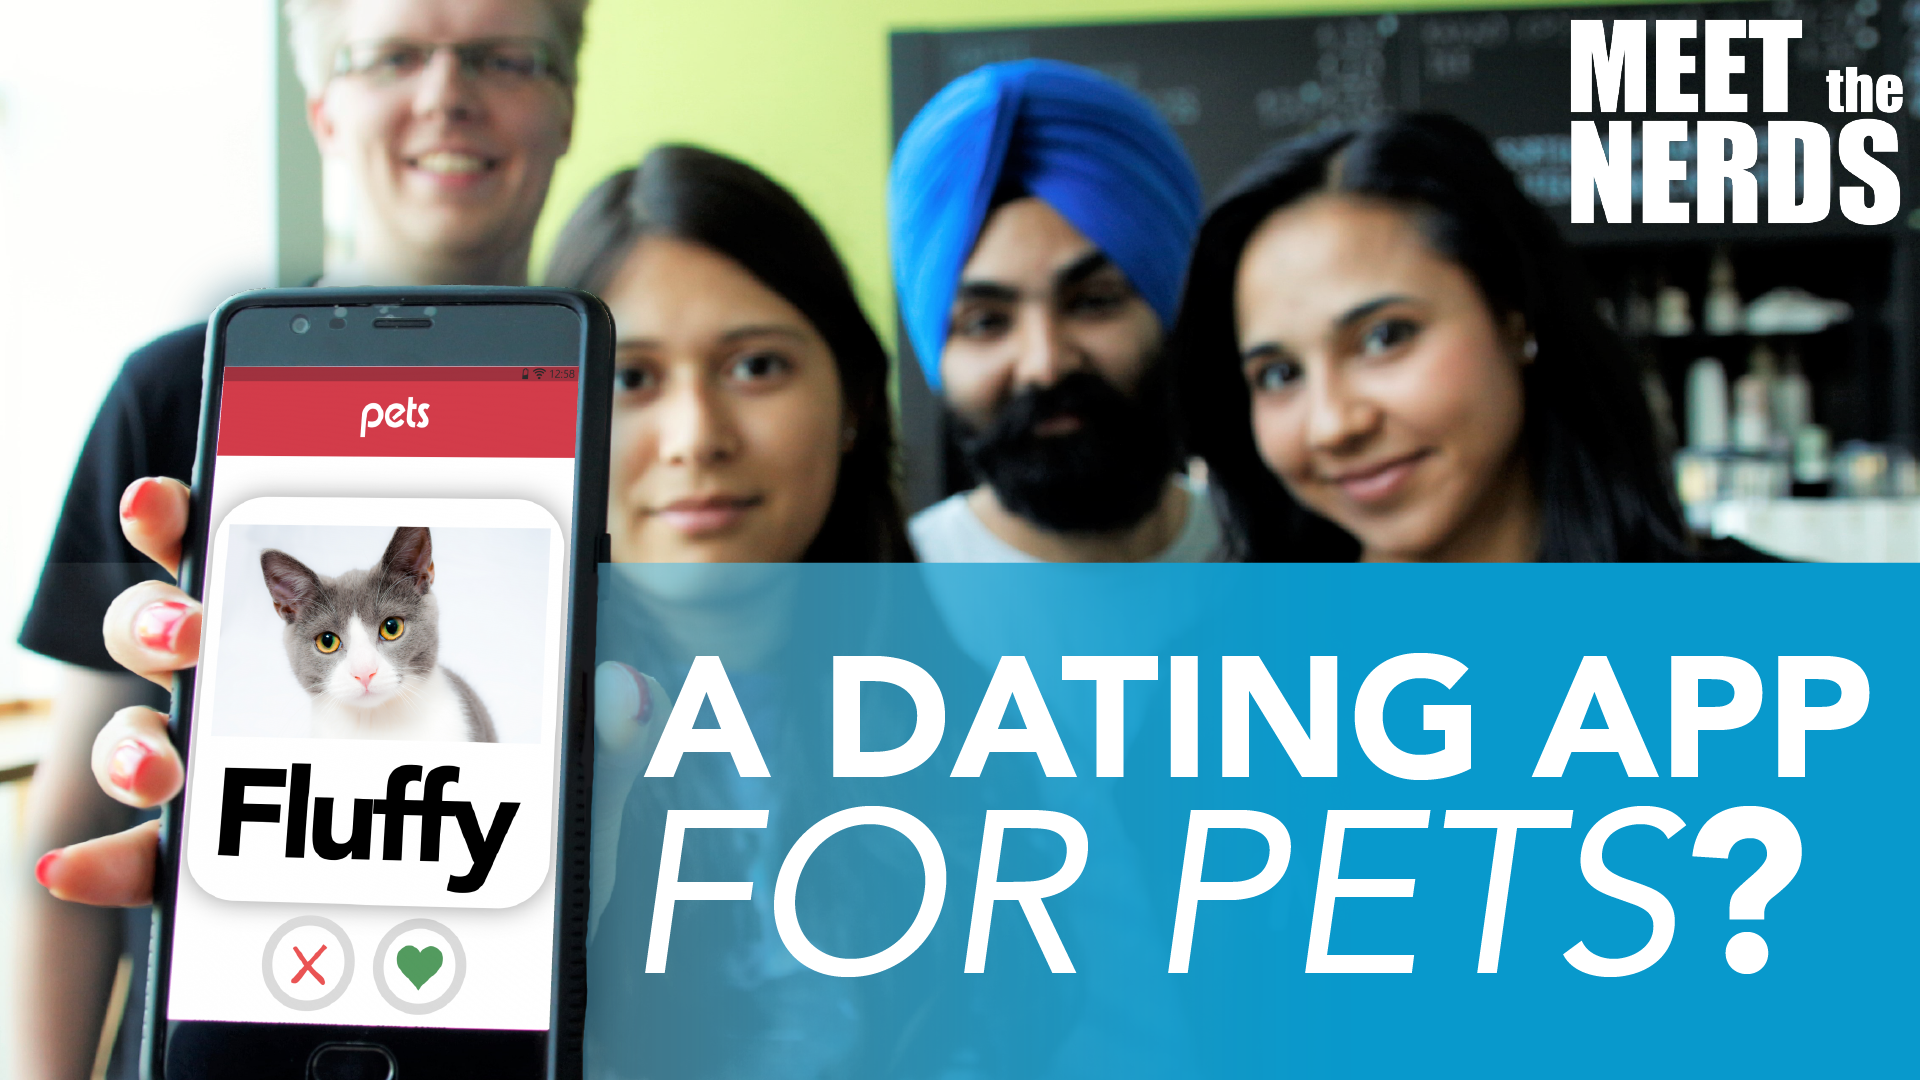 Kostenlose dating sites in kanada christian